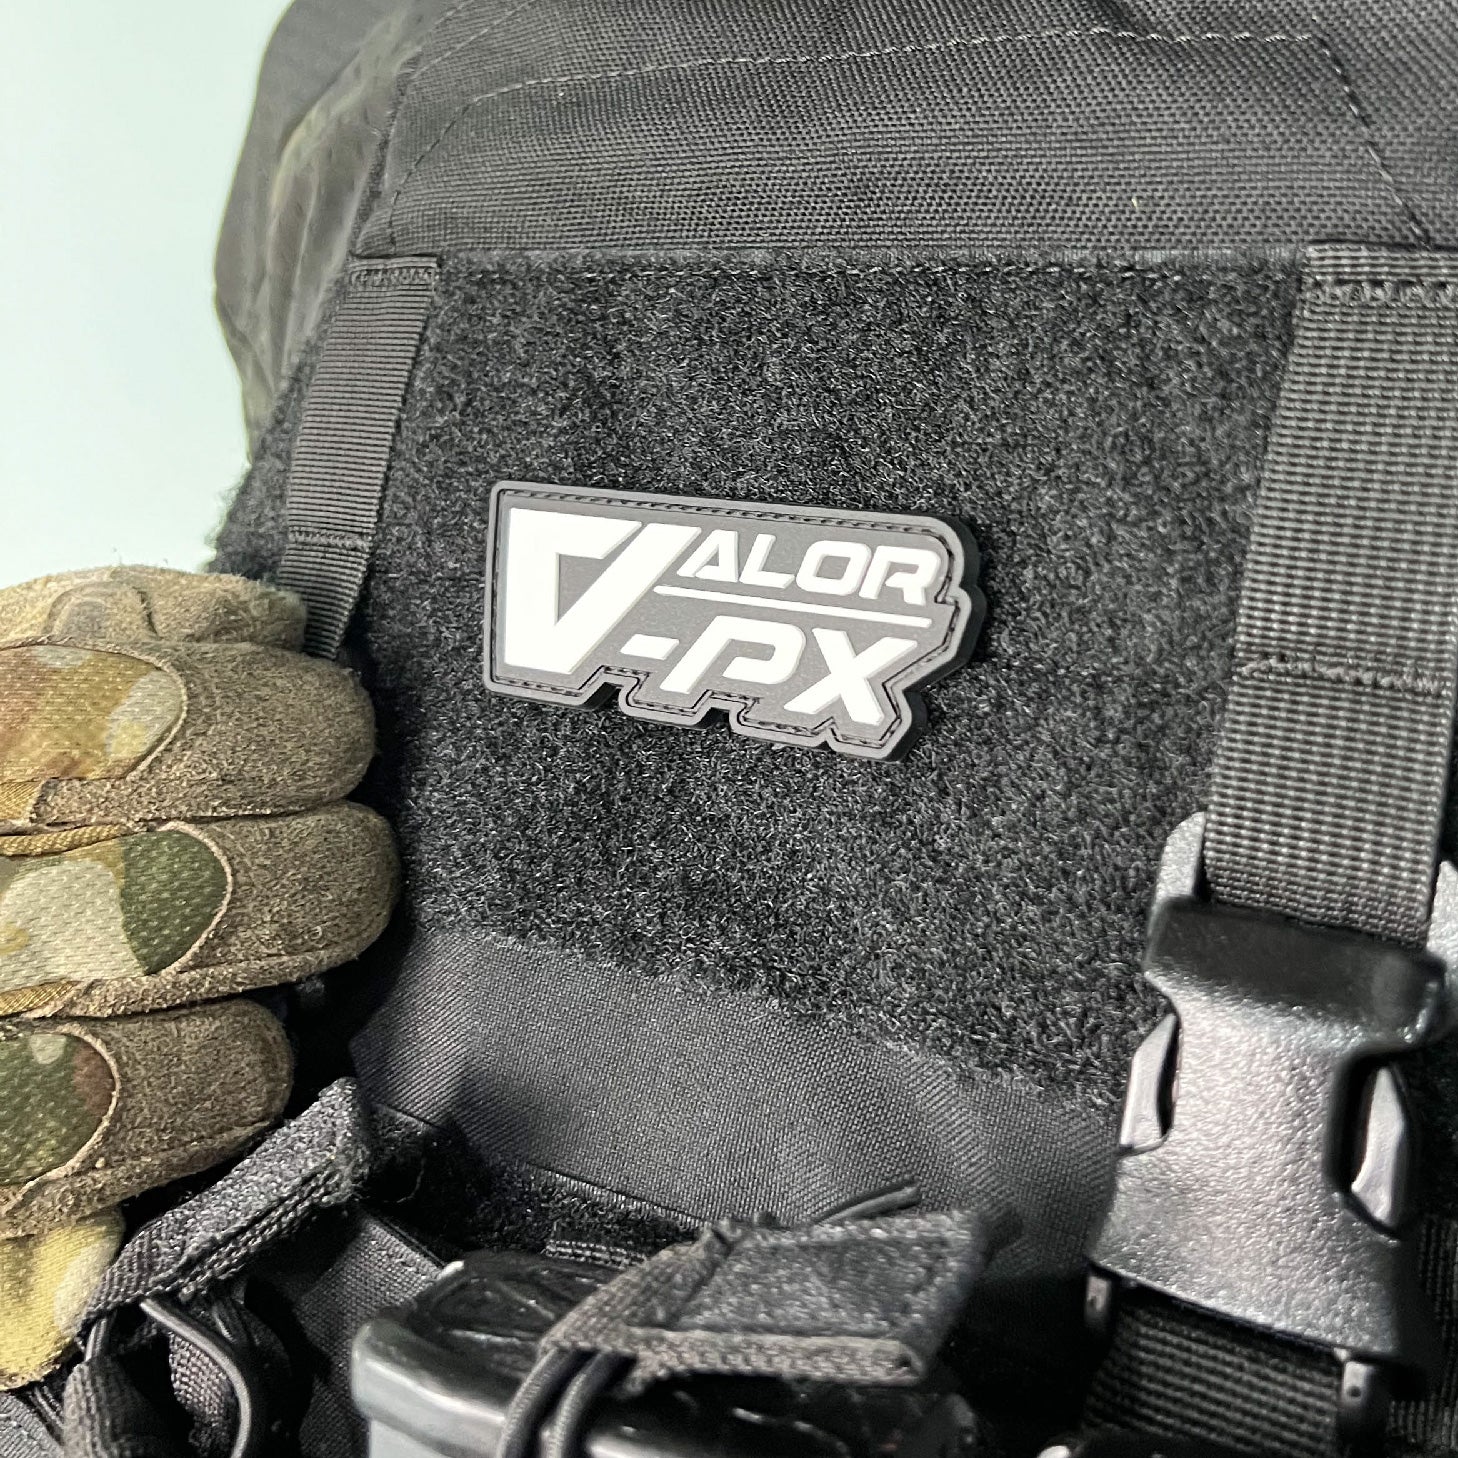 Valor PX - PVC Patches - Valor PX Original Logo